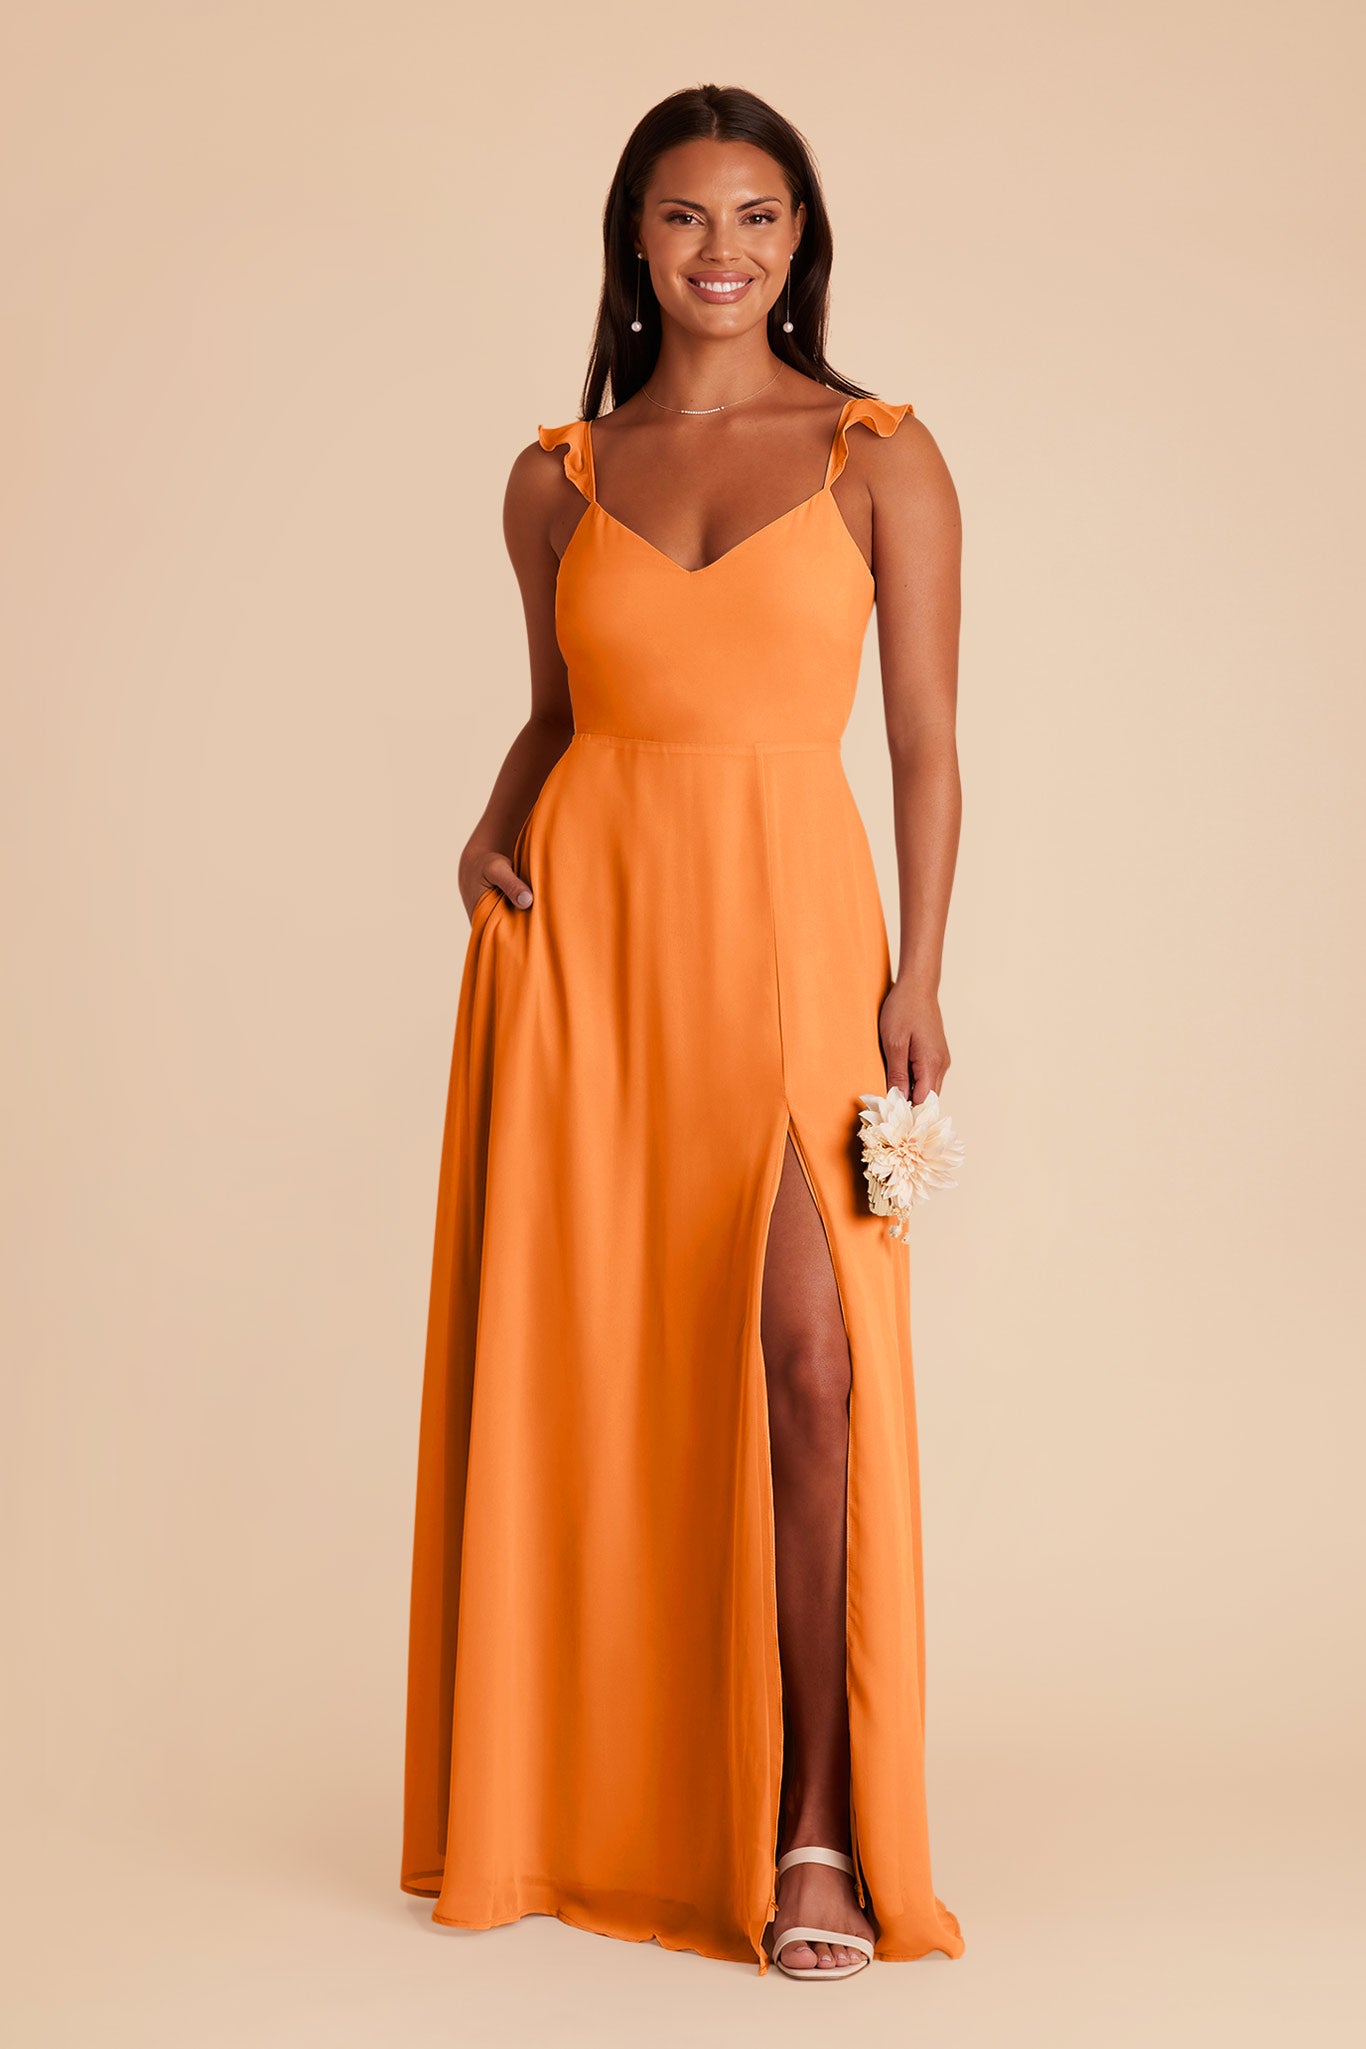 Apricot Doris Chiffon Dress by Birdy Grey